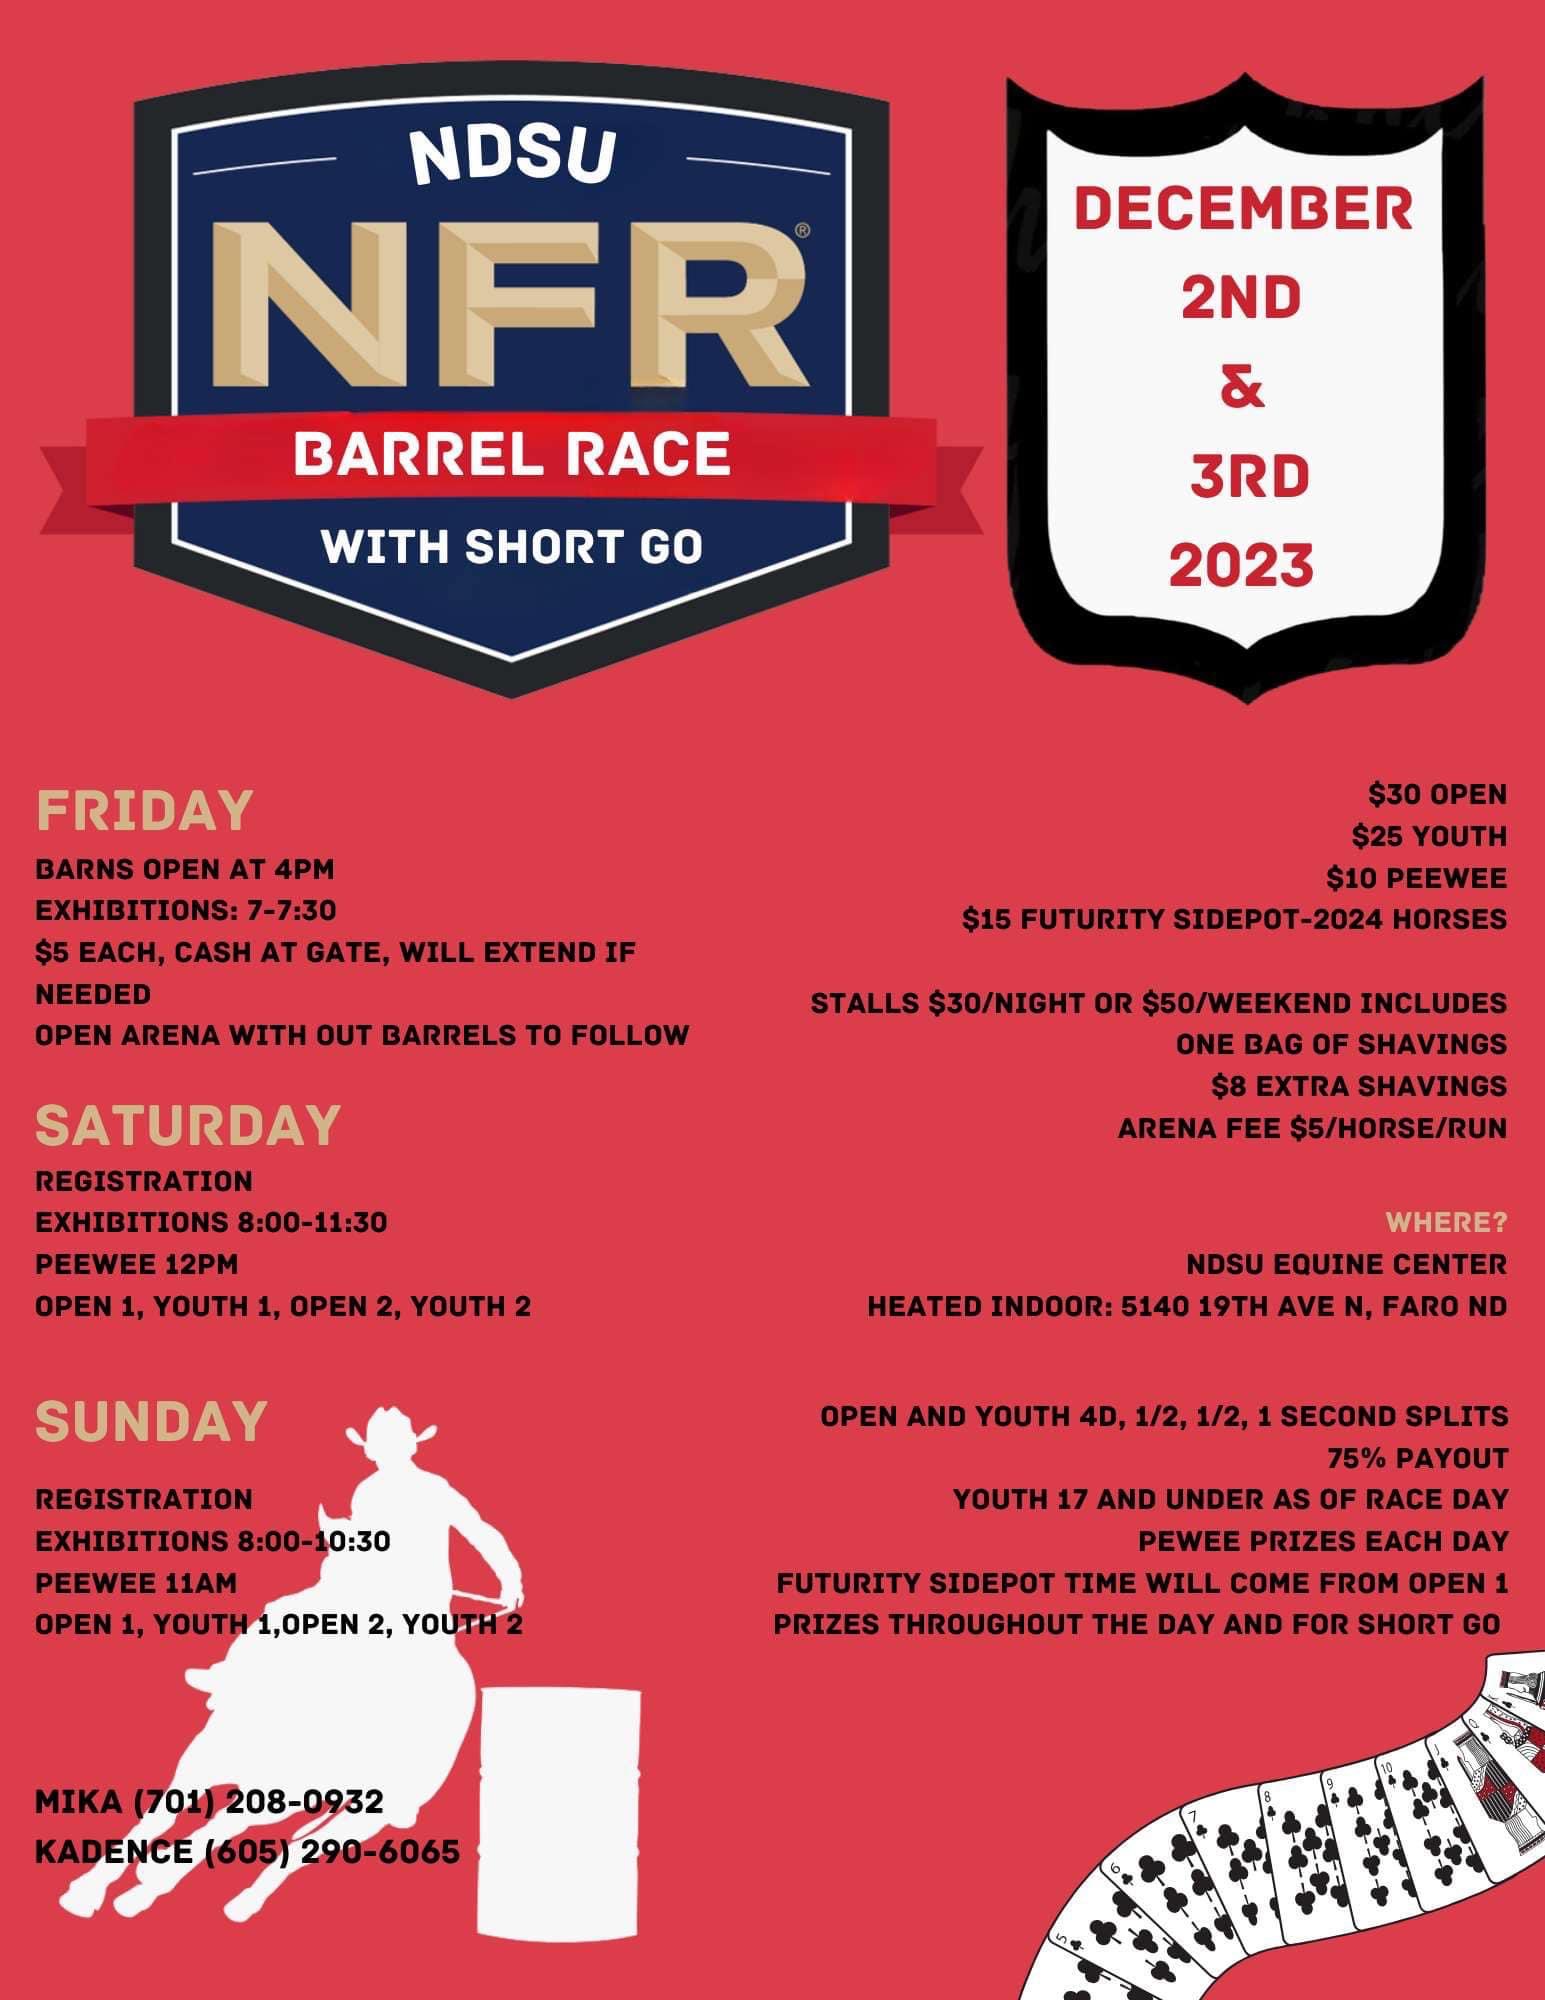 NDSU NFR Barrel Race 